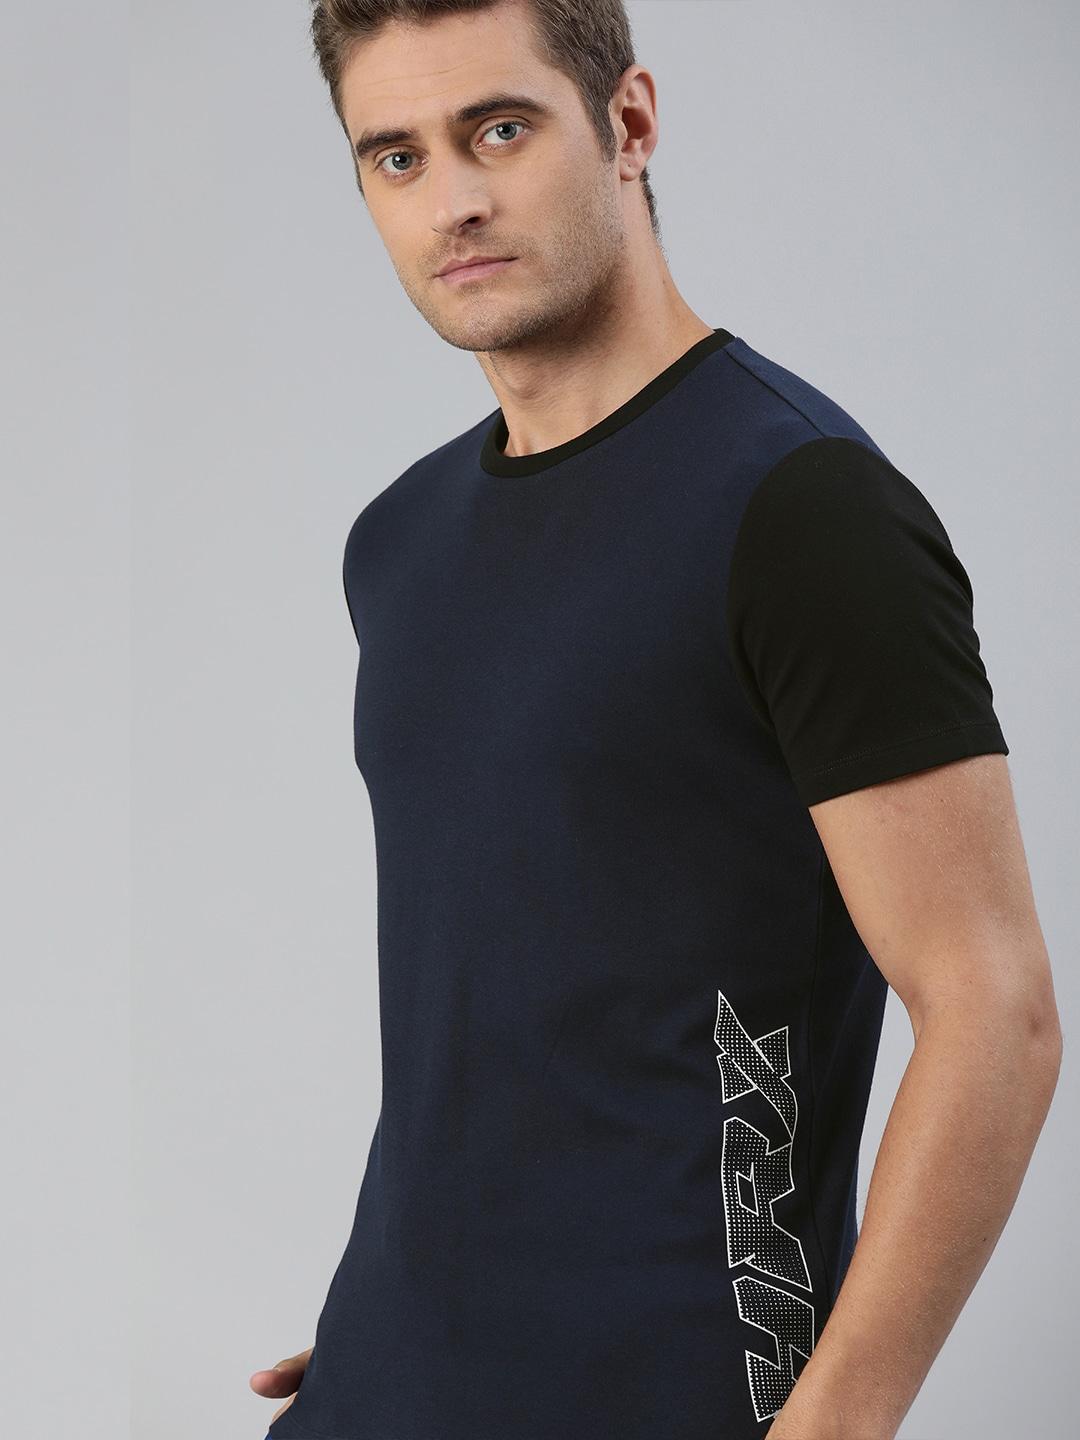 hrx-by-hrithik-roshan-men-navy-blue-solid-bio-wash-lifestyle-tshirts